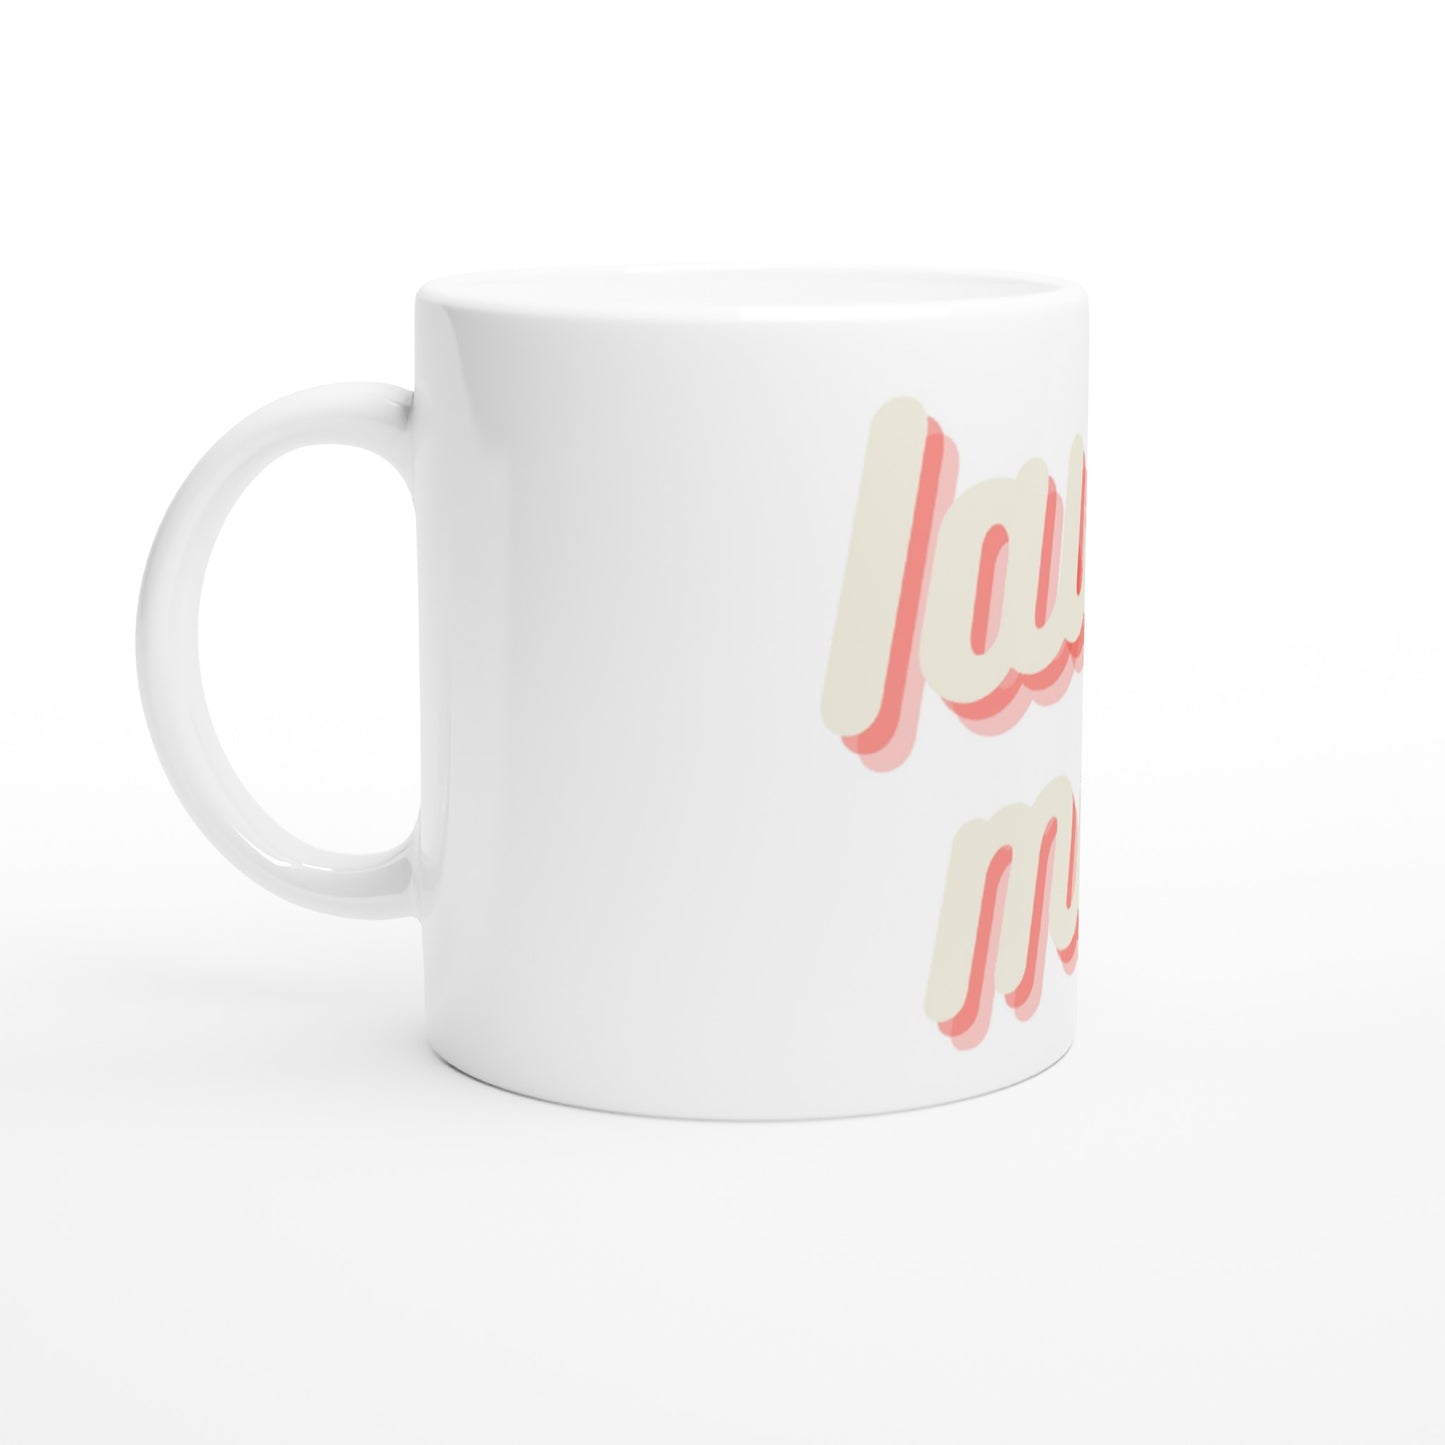 Iawn Met - 11oz Ceramic Mug